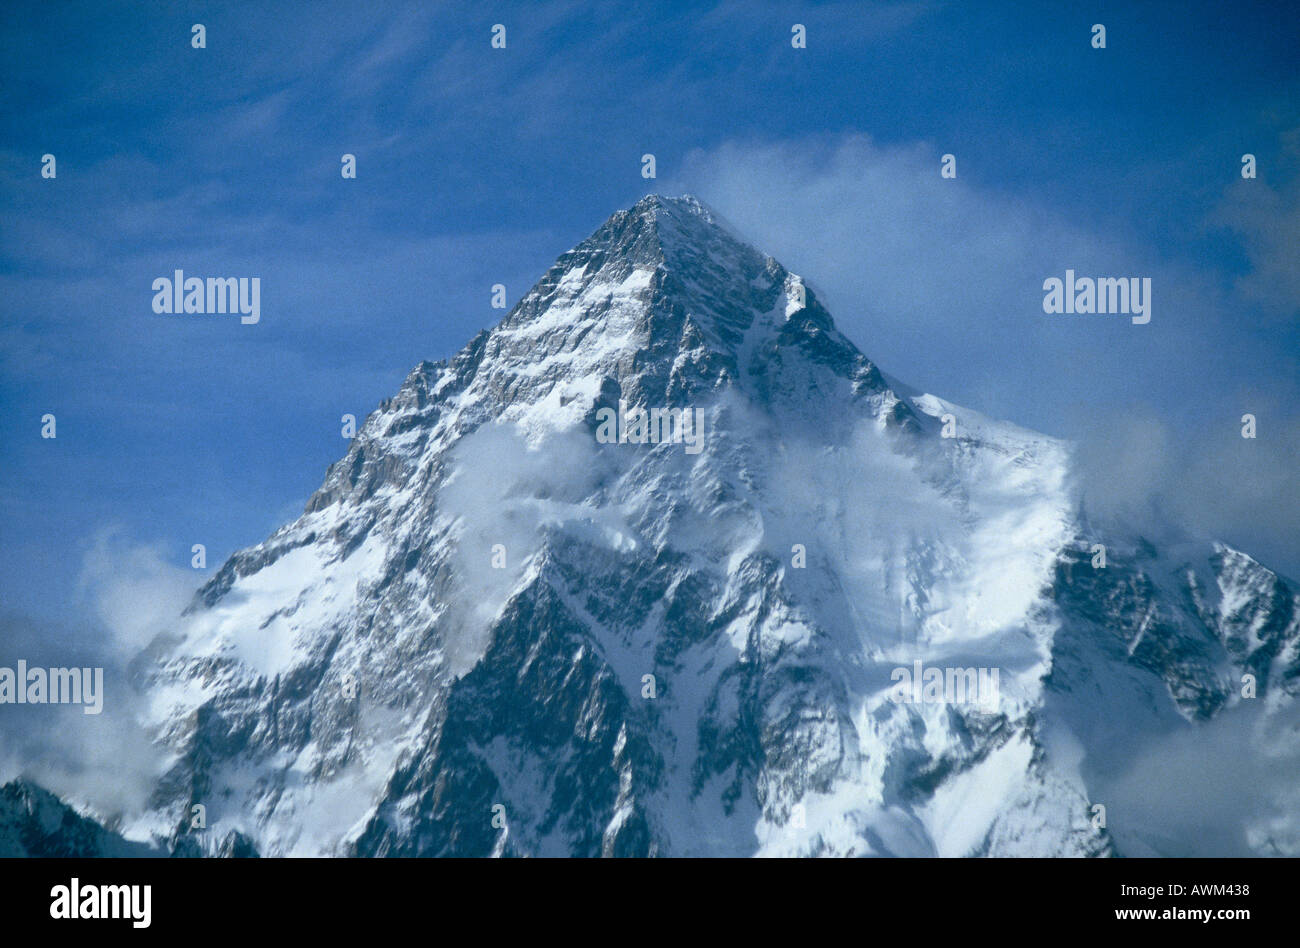 Snowcovered mountain peak against the blue sky, Mt K2, Godwin Austen, Karakorum Range, Pakistan Stock Photo